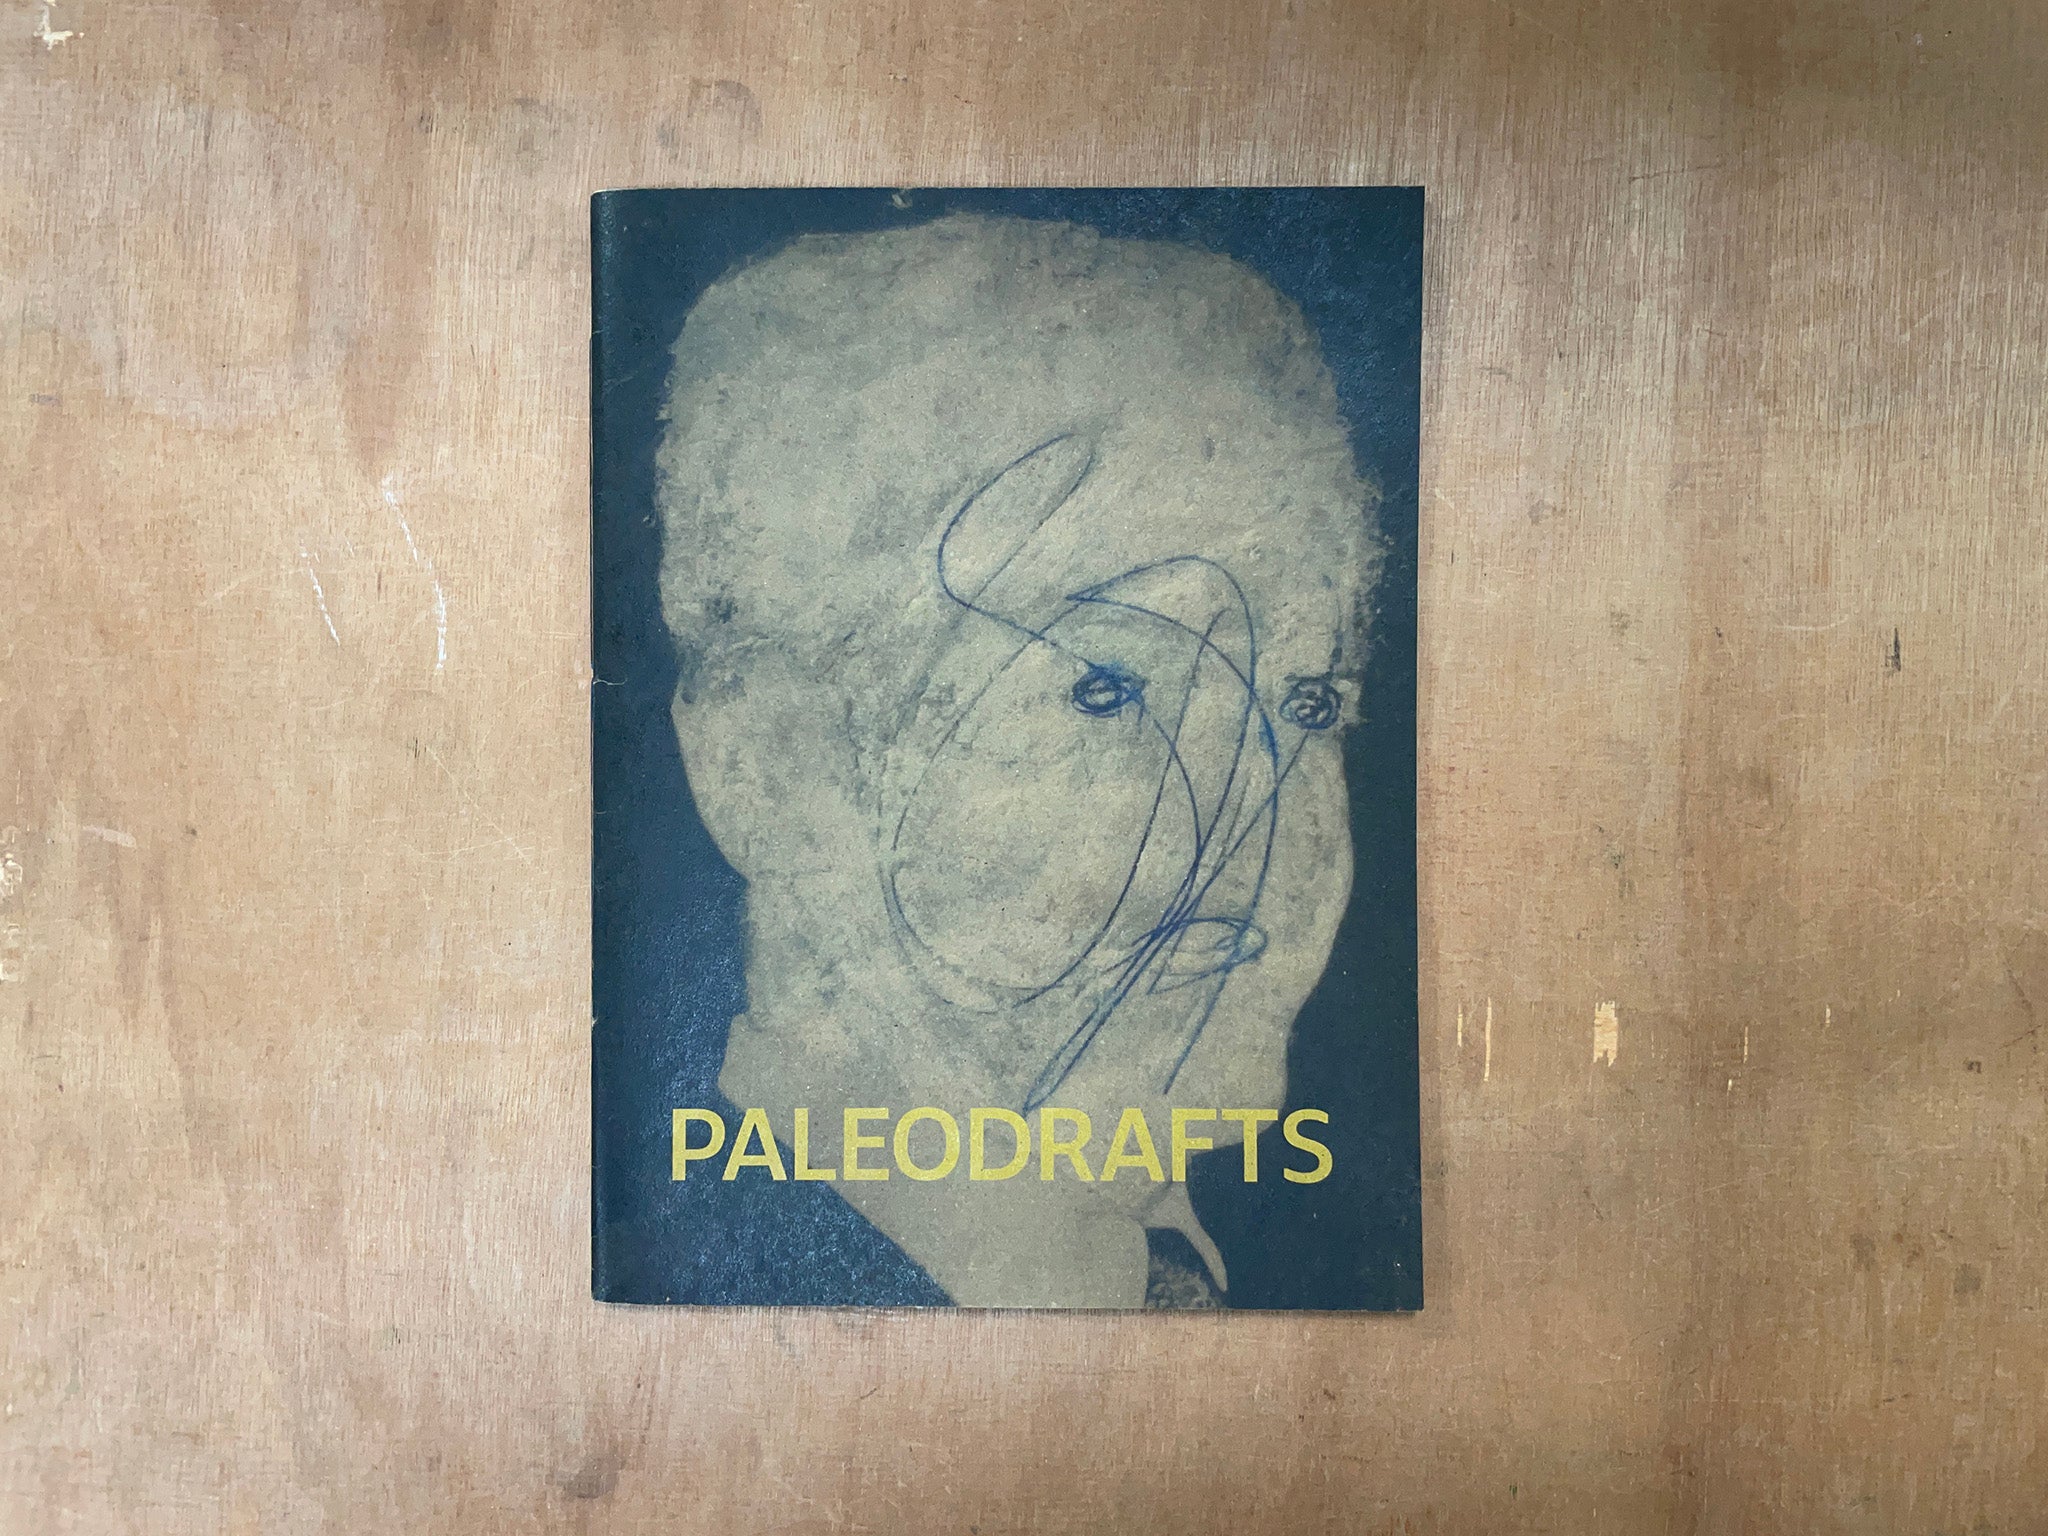 PALEODRAFTS by Joe Devlin & Michael Hampton